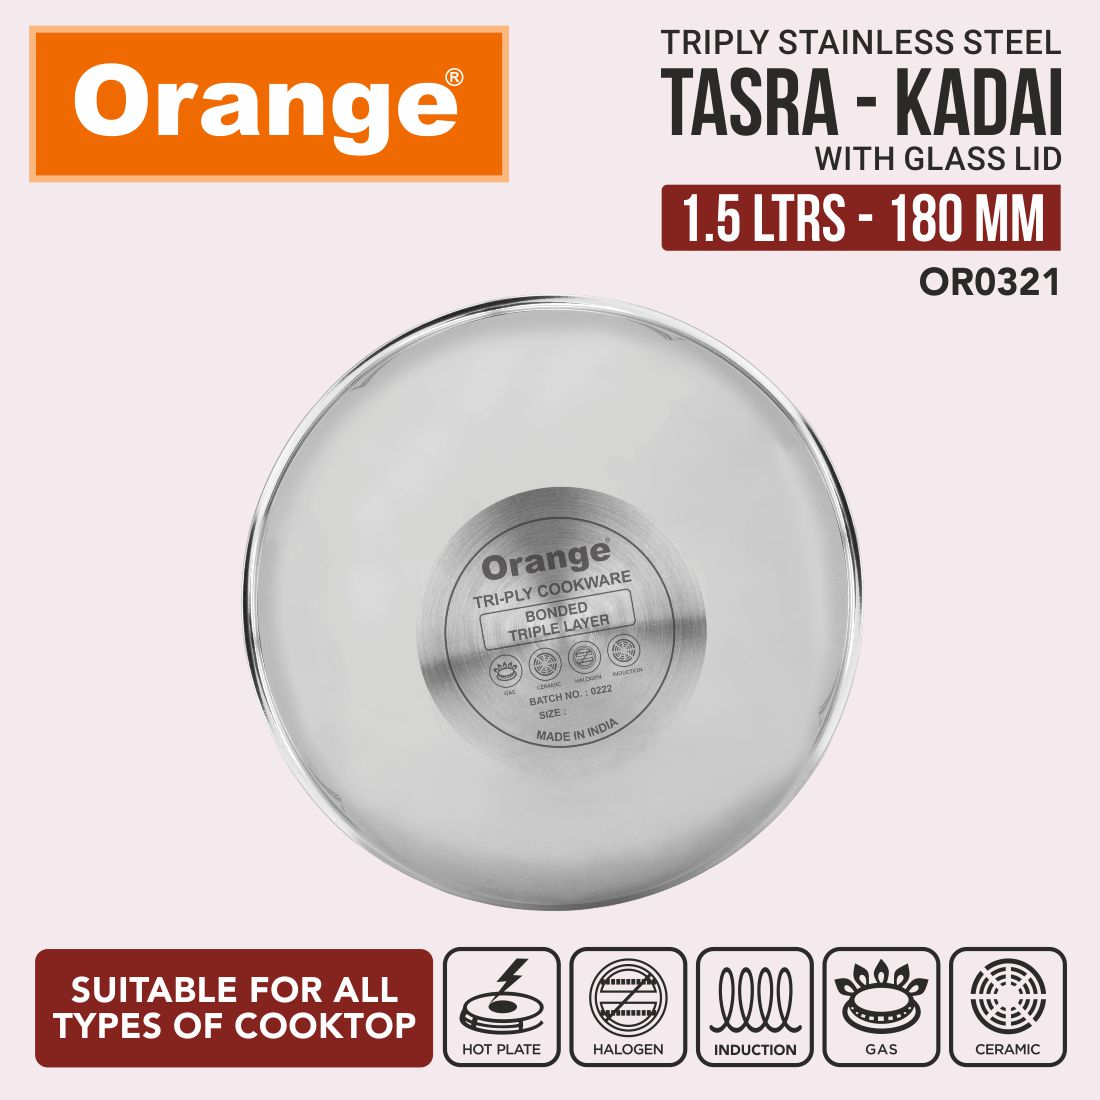 Orange Triply Stainless Steel Deep Kadai/Tasla with Glass Lid